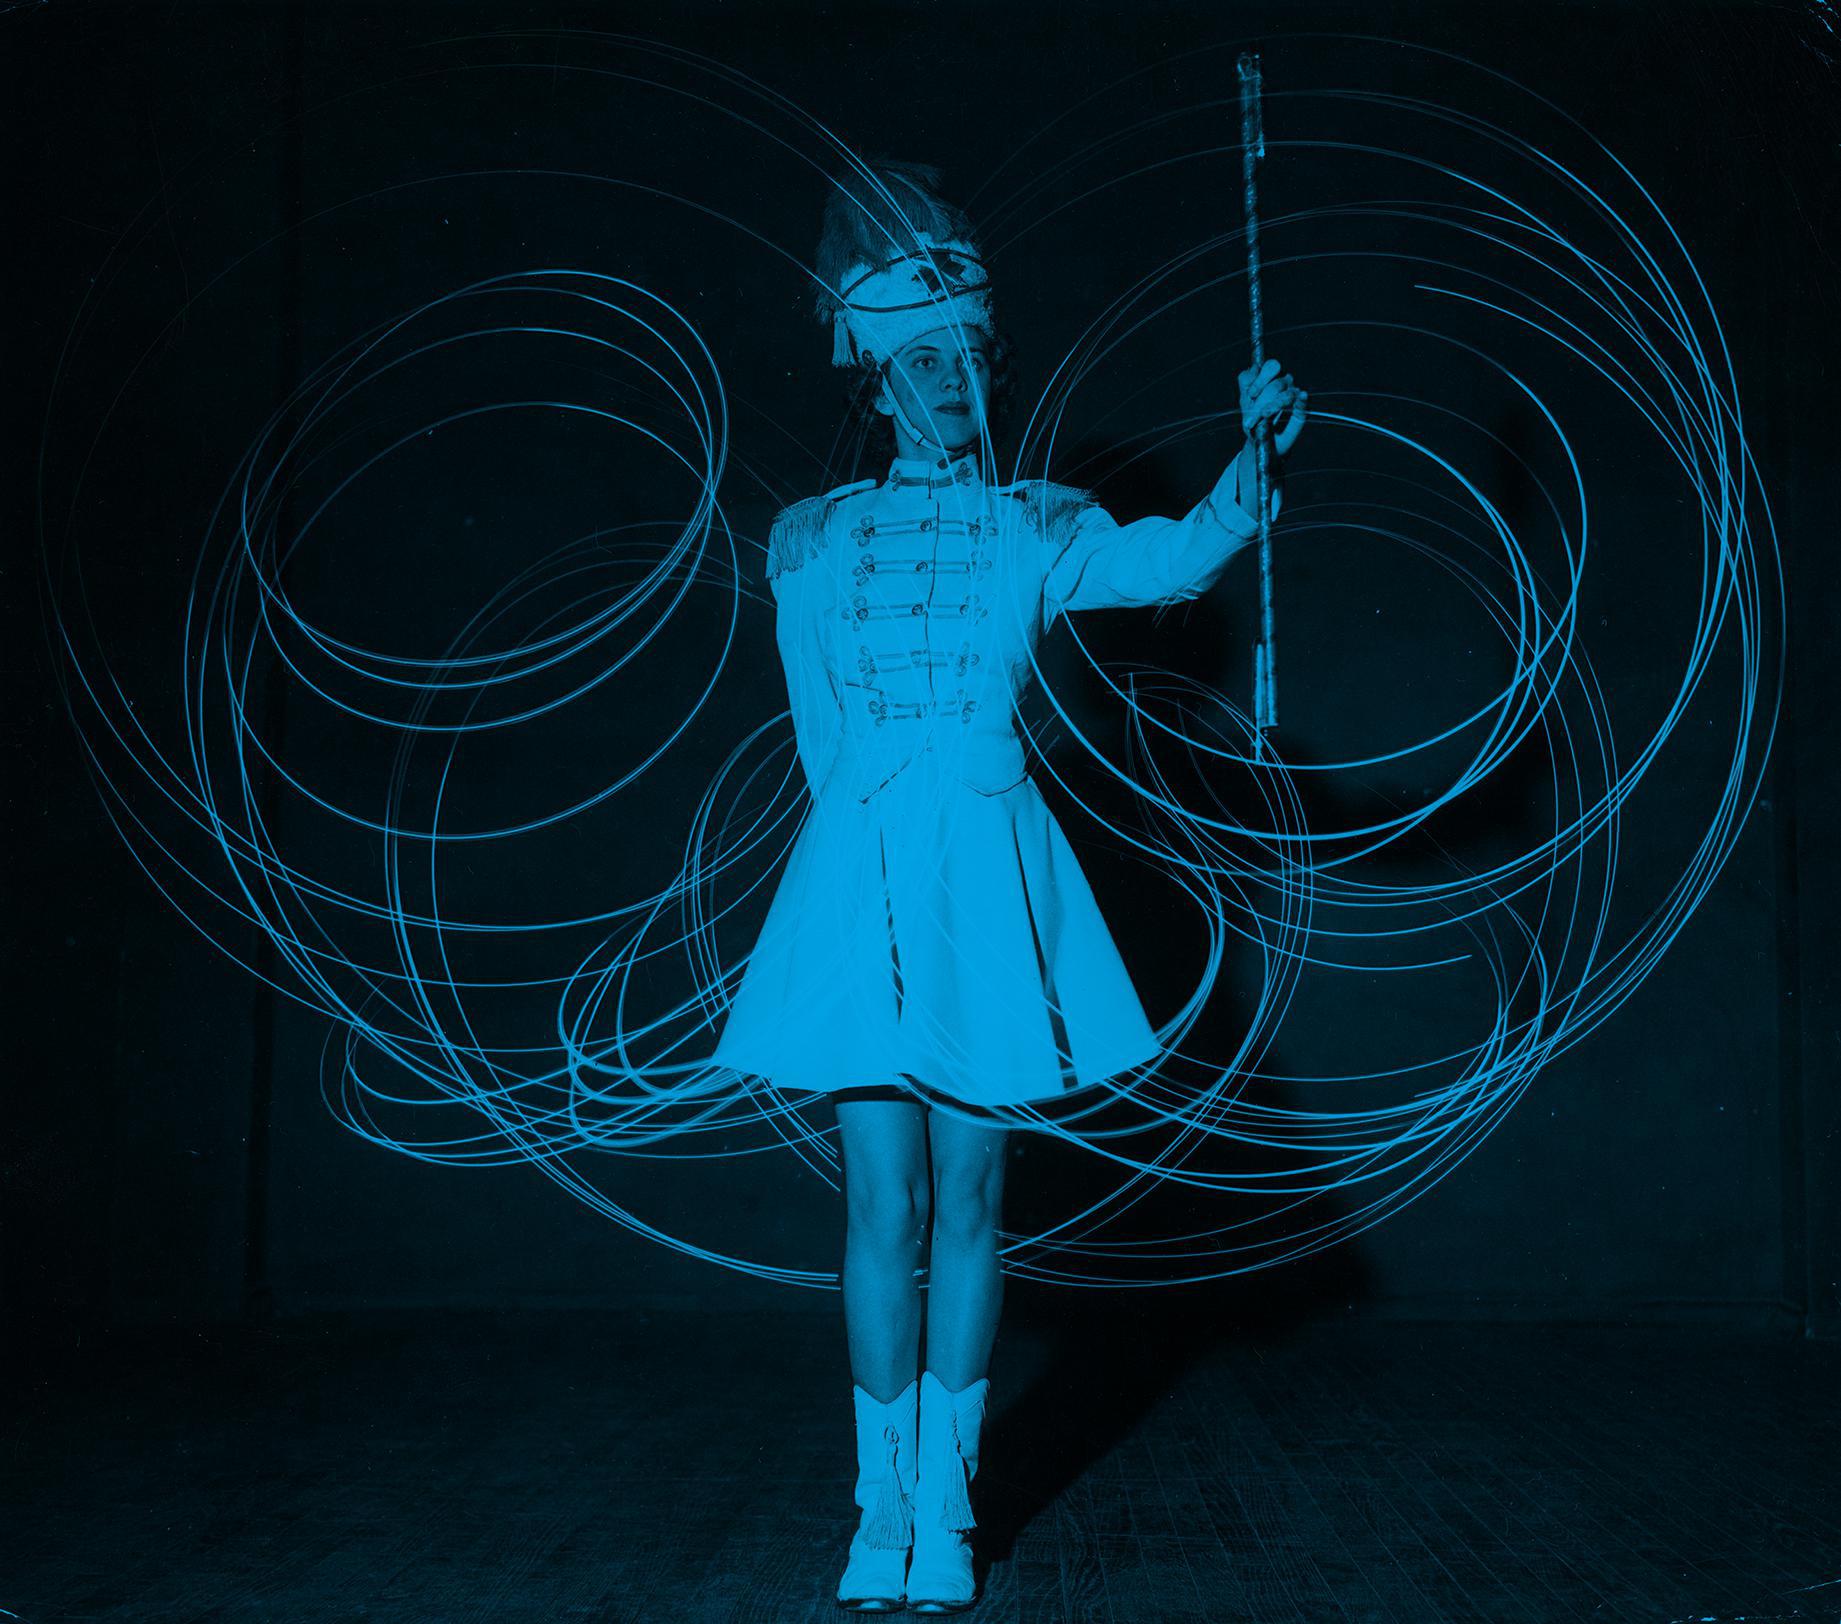 A woman in a white dress swirls a baton, leaving blue circles in its path